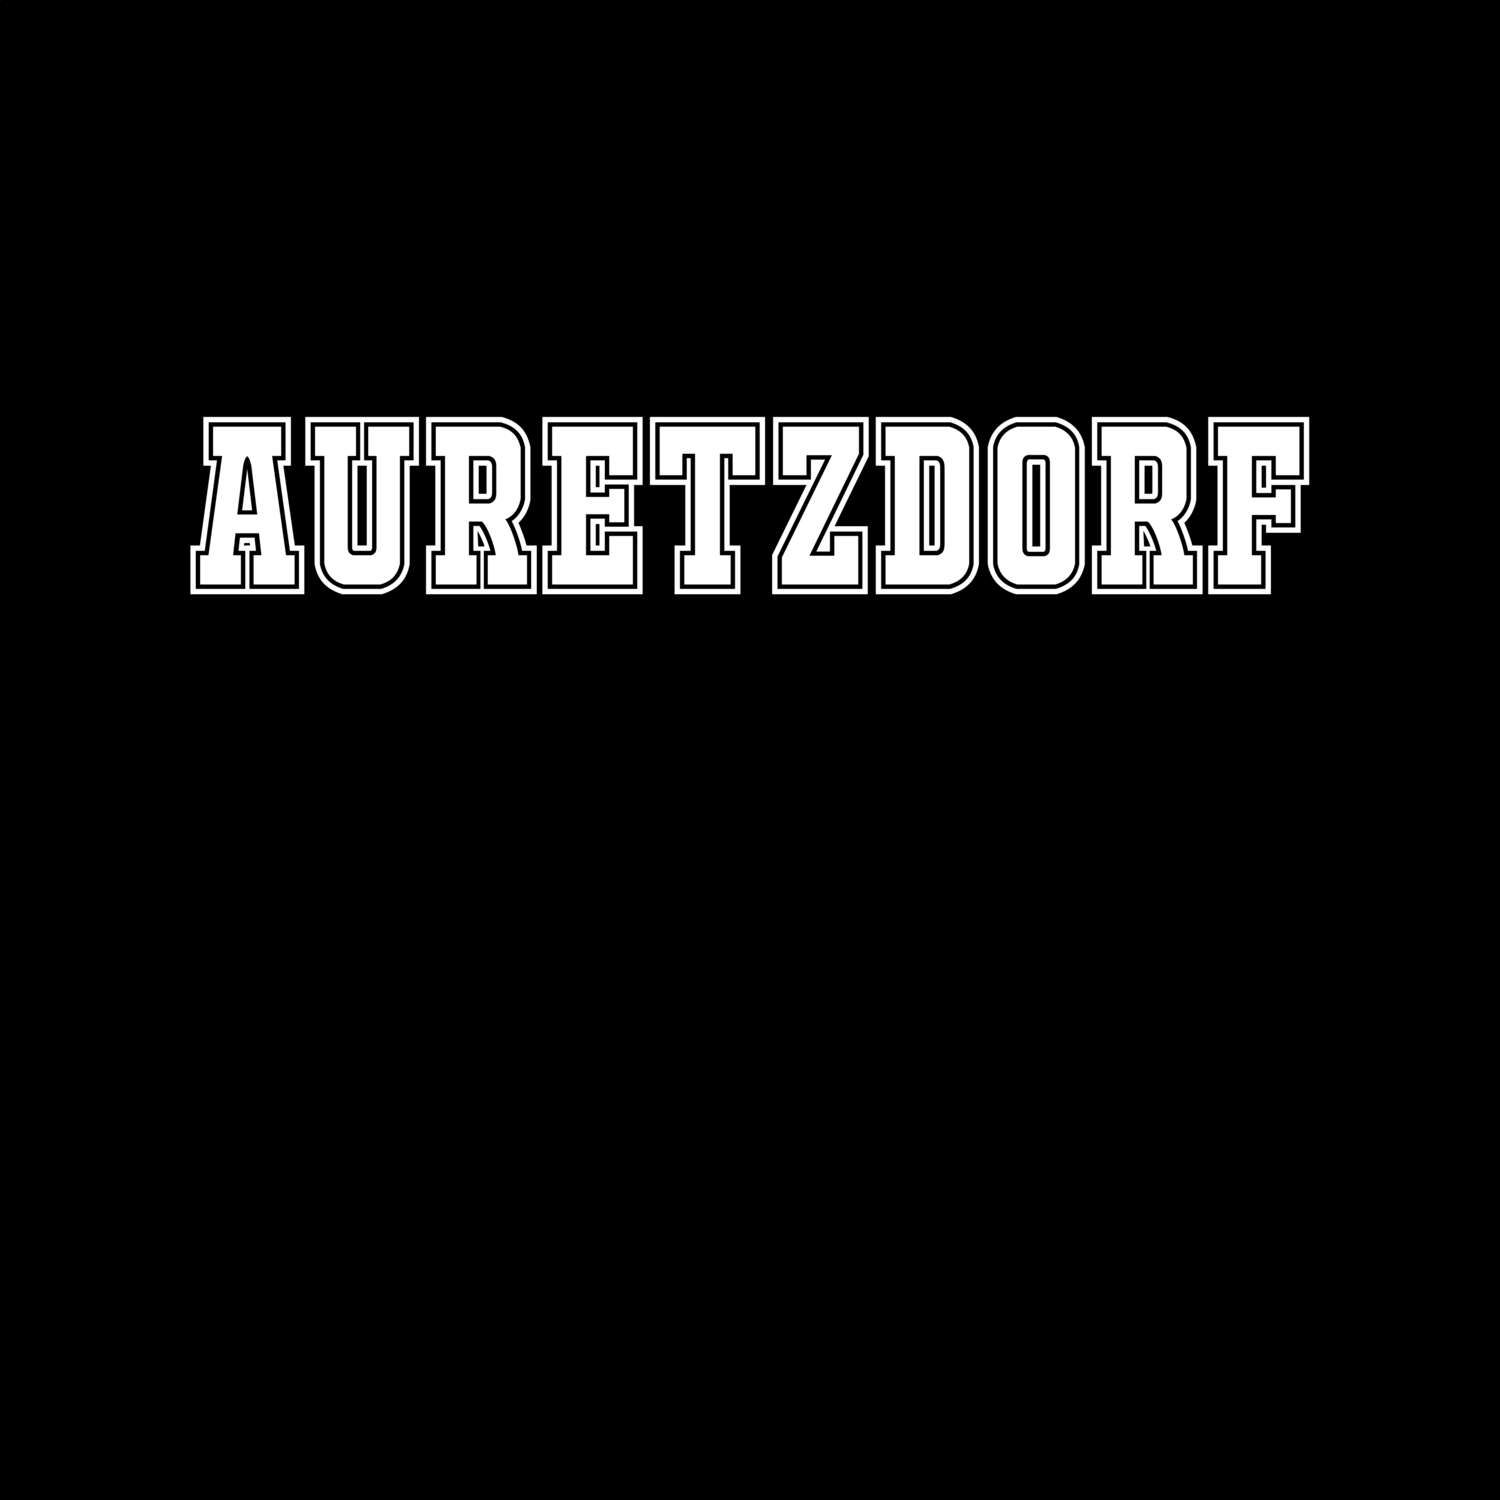 Auretzdorf T-Shirt »Classic«